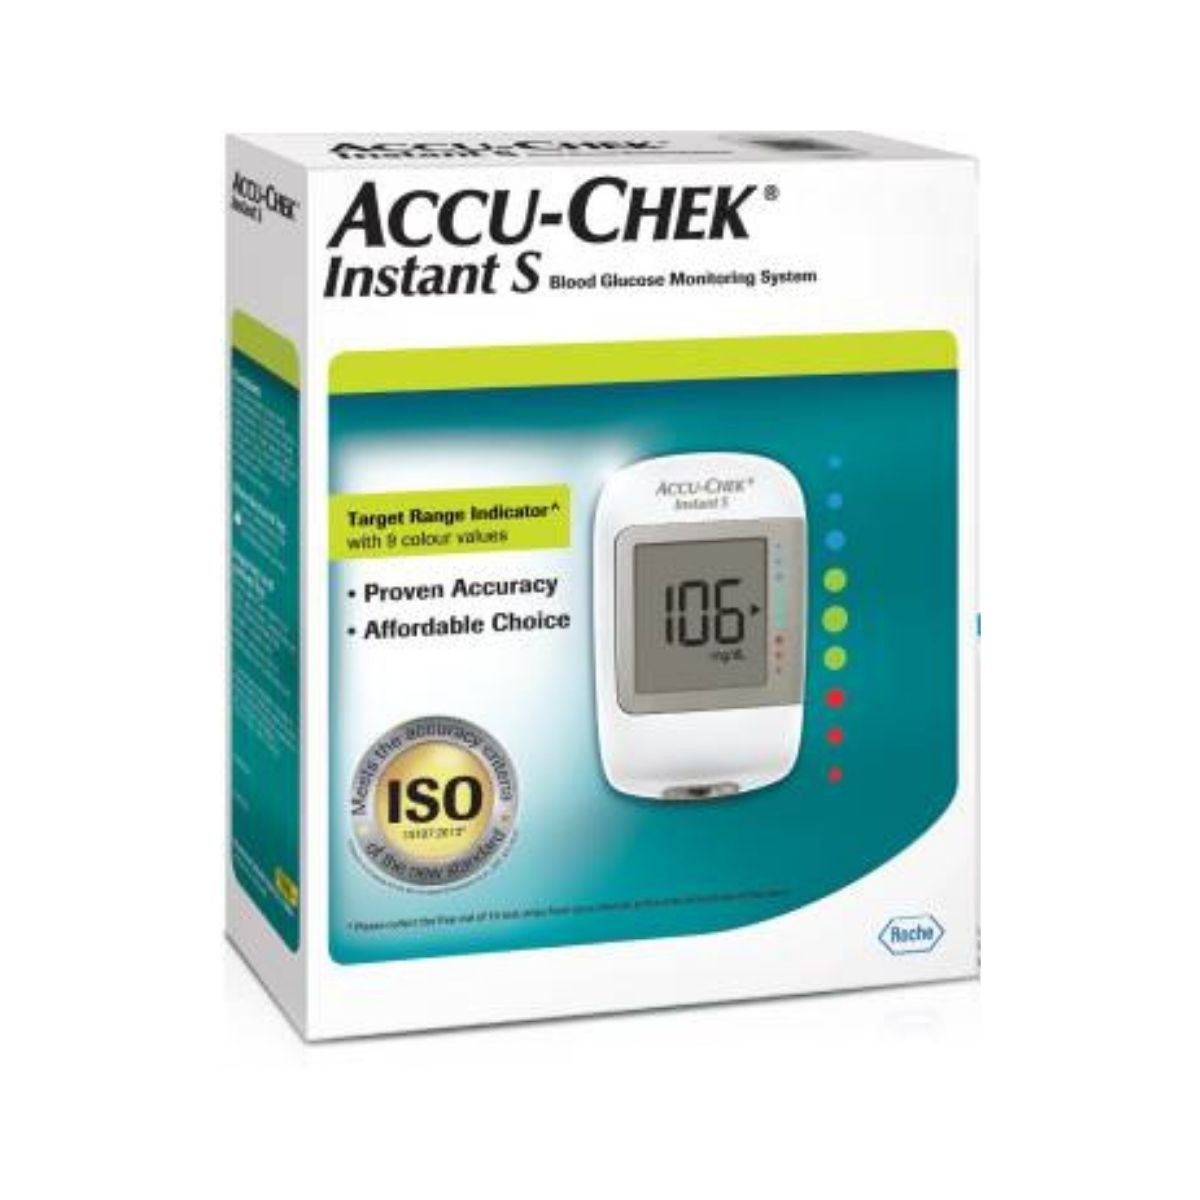 Accu-chek Instant S Device